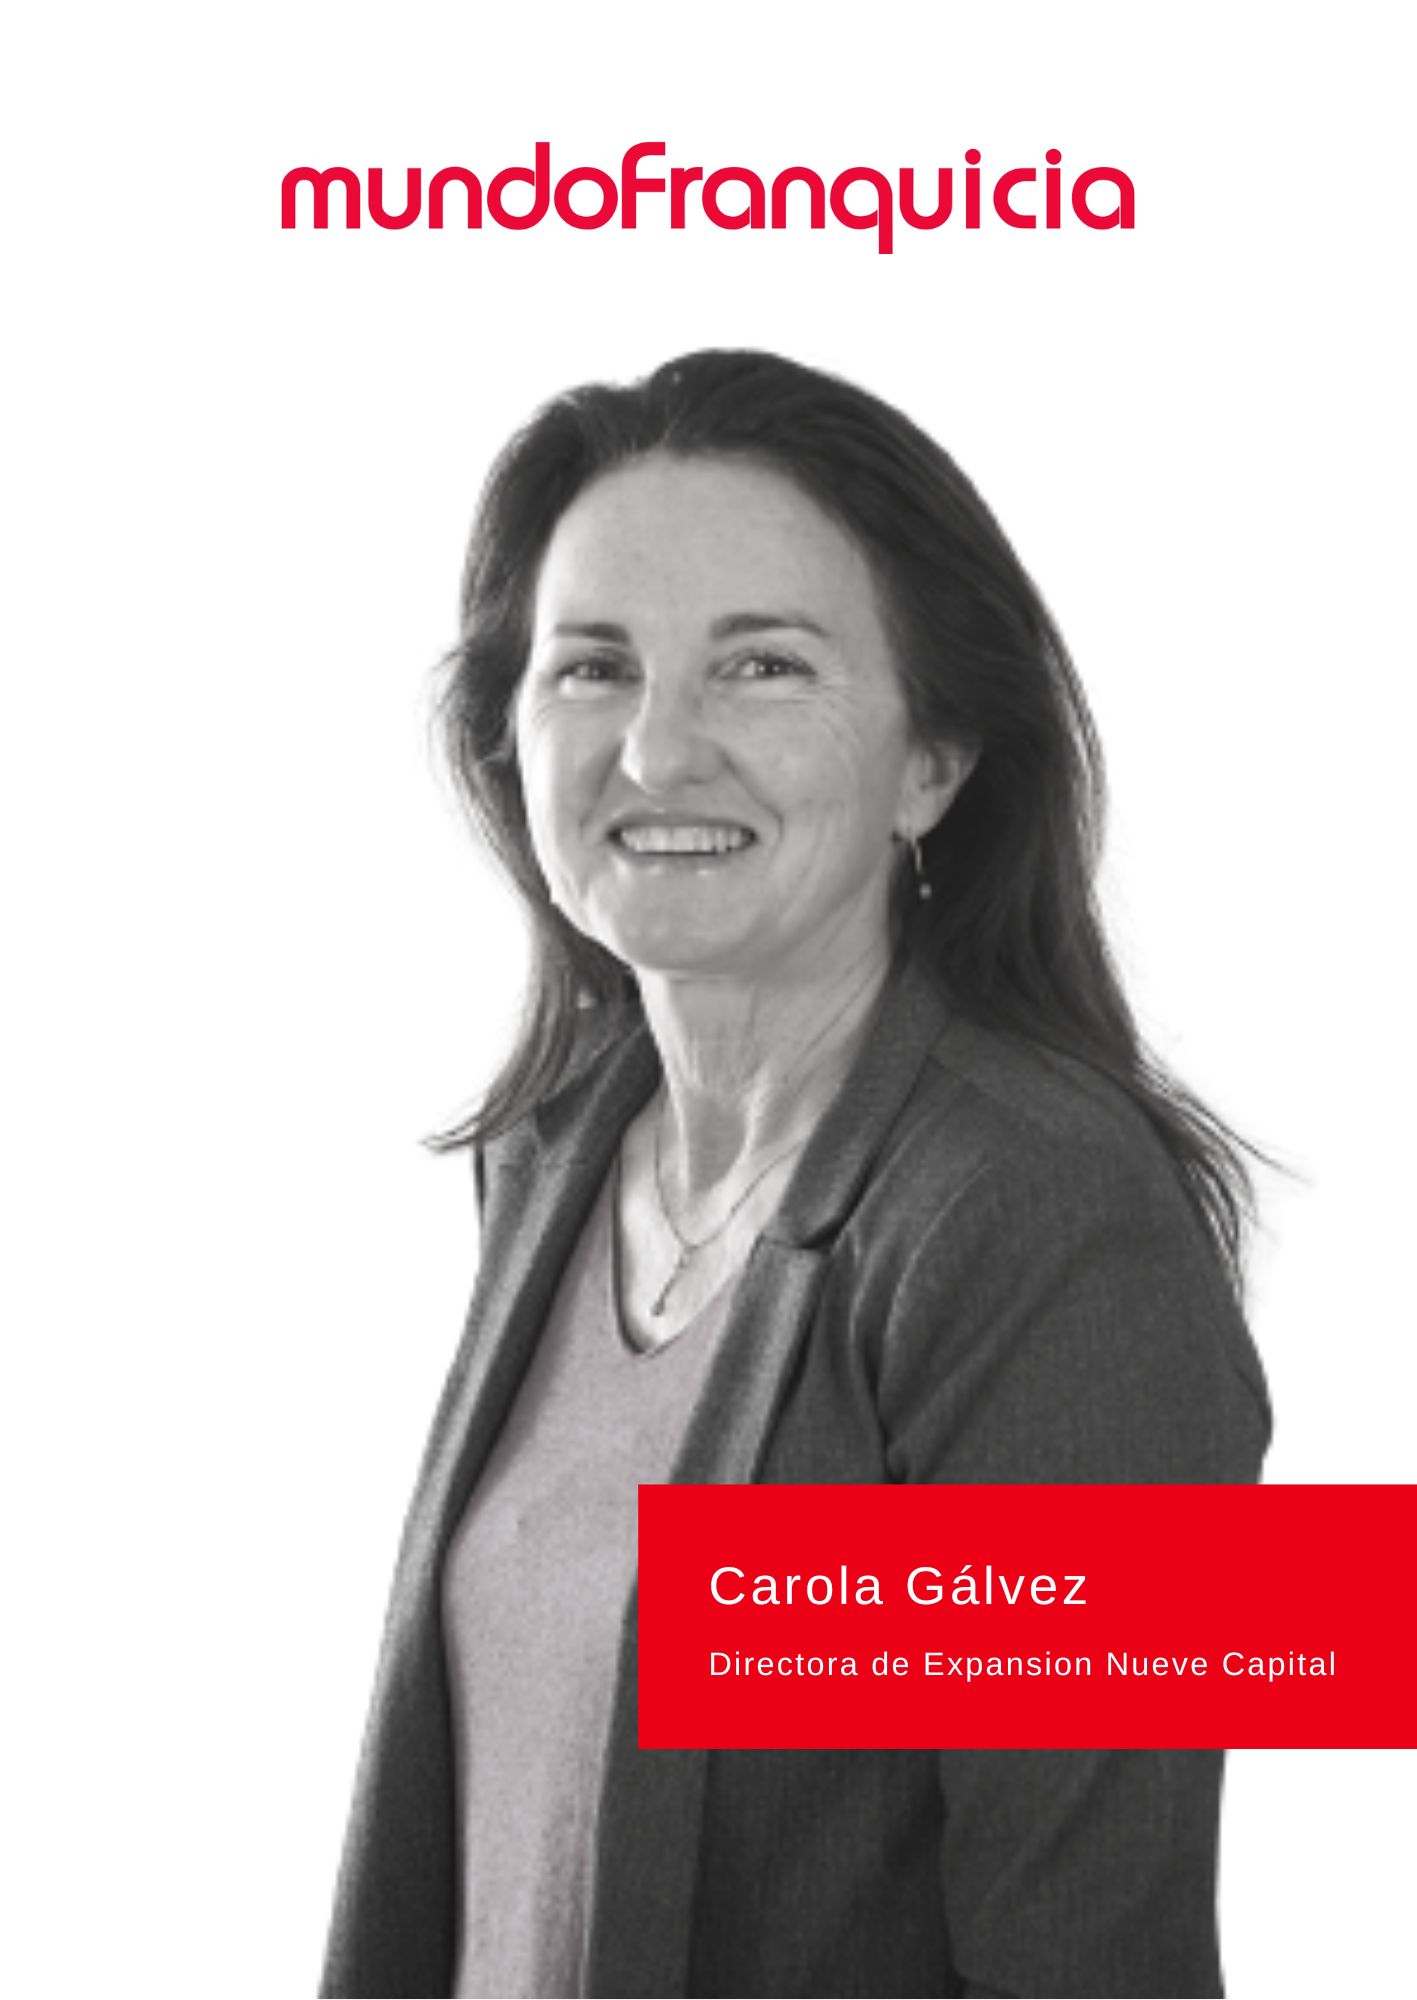 Carola Gálvez